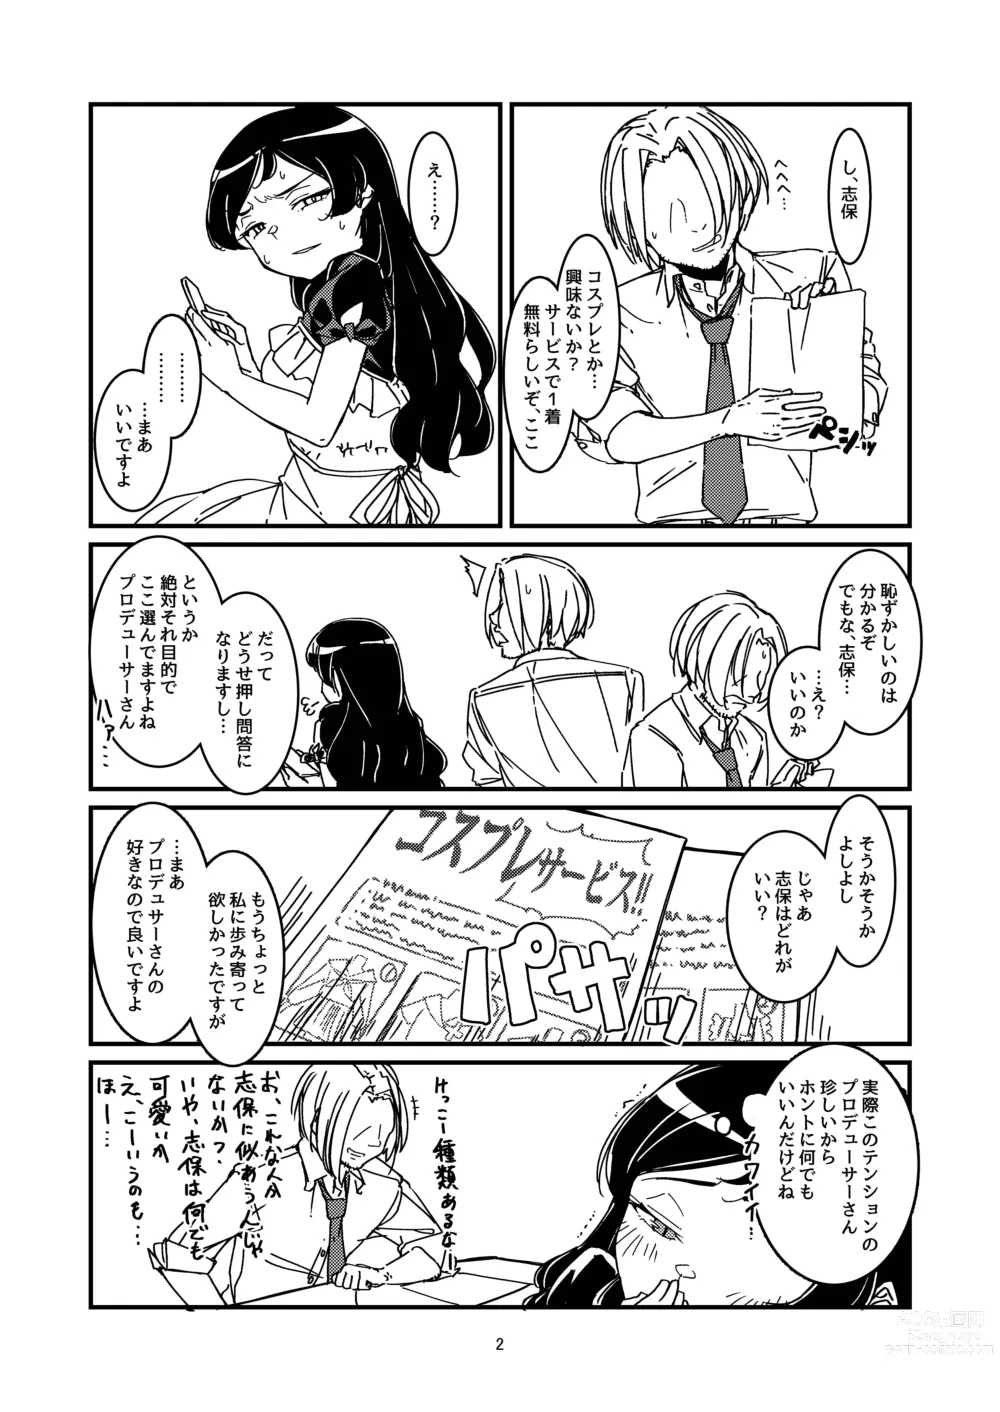 Page 39 of doujinshi Kuroneko no Kyouji + Aruhi no Kuro Usagi